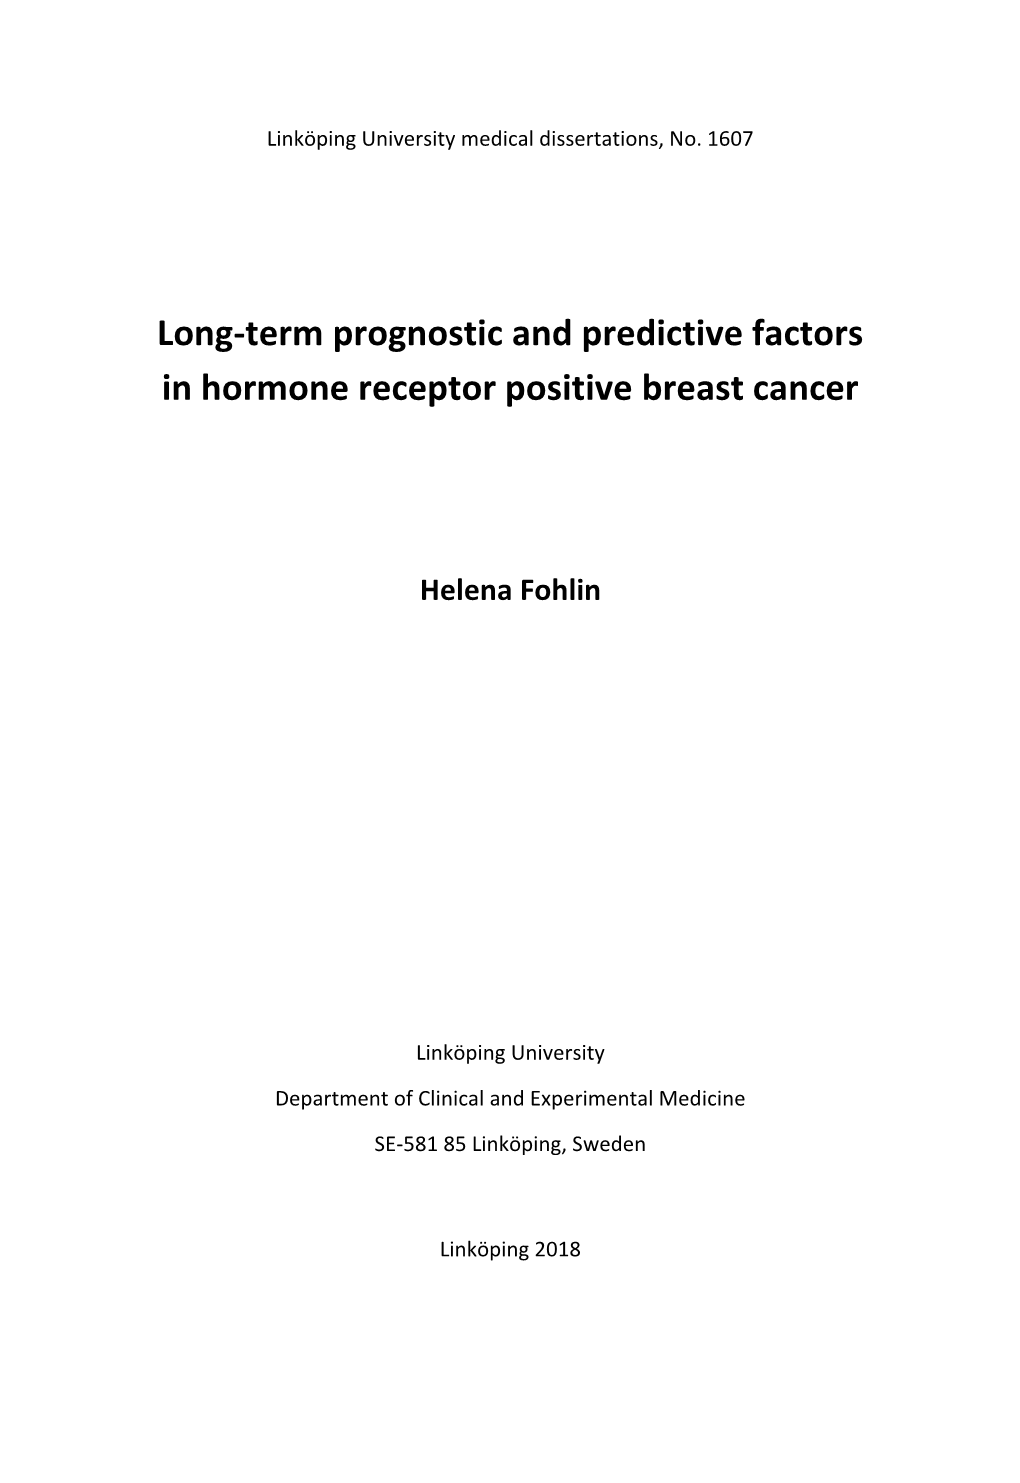 Long-Term Prognostic and Predictive Factors in Hormone Receptor Positive Breast Cancer